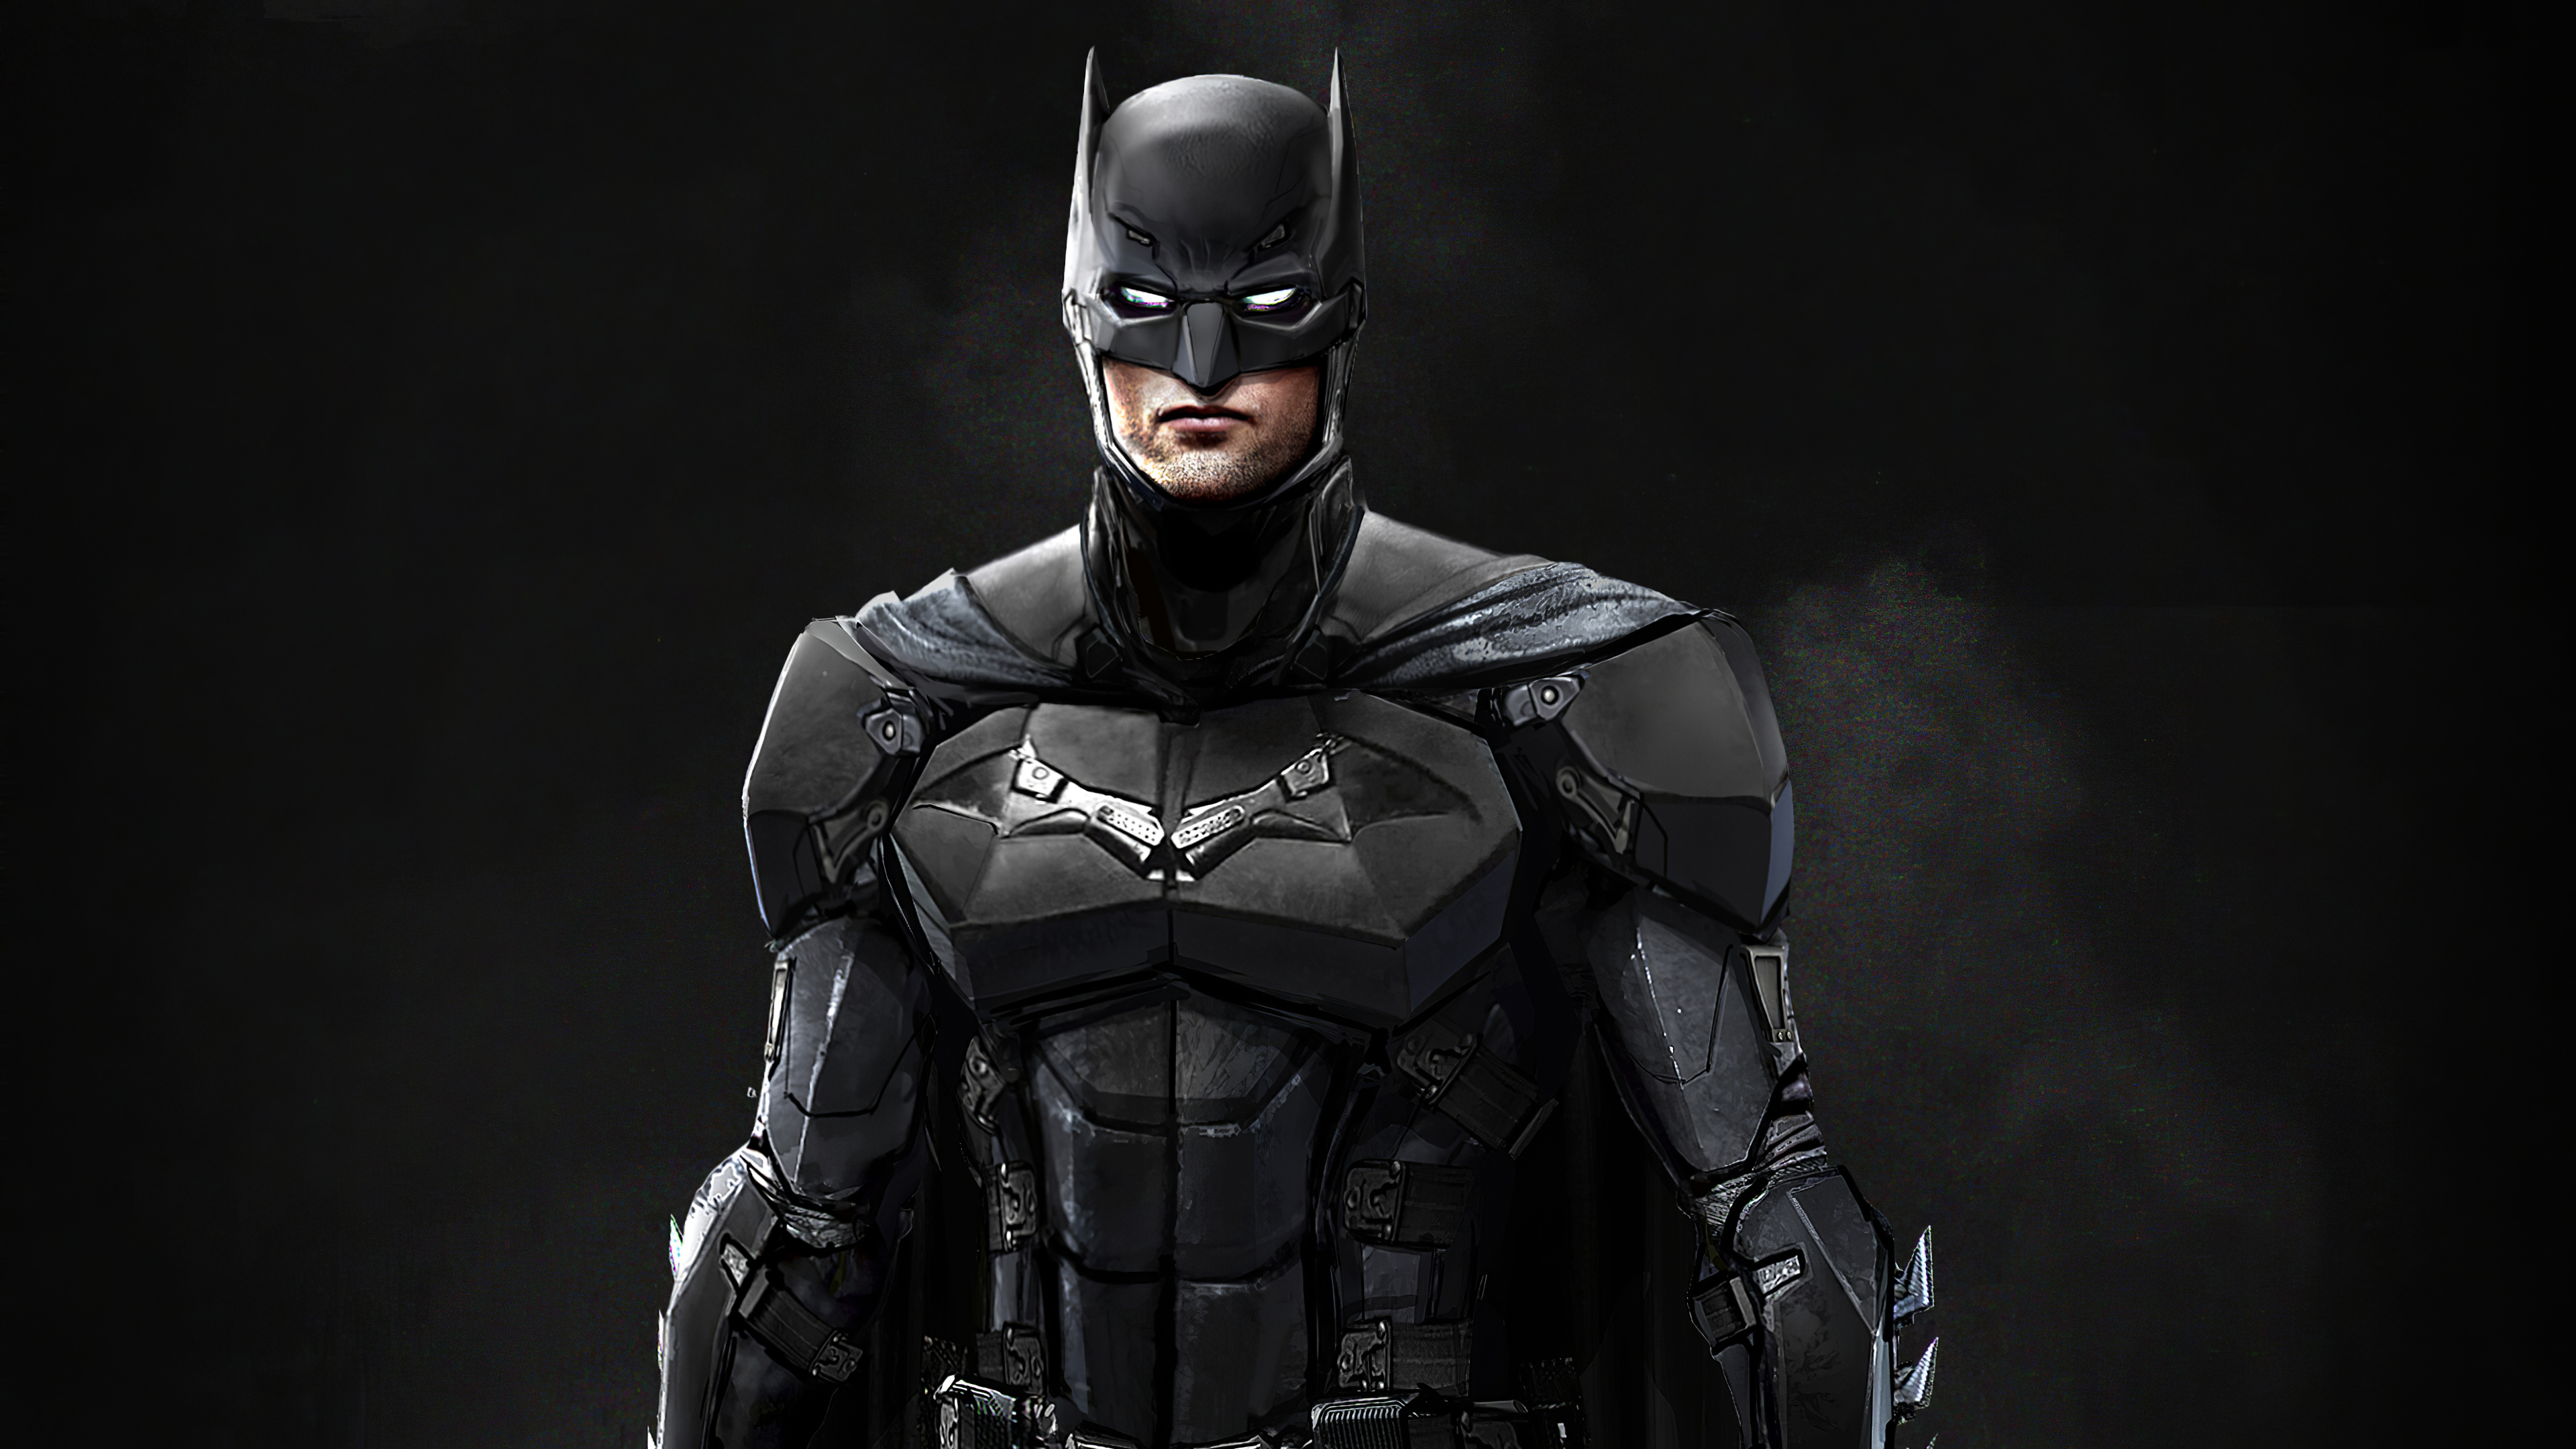 Batman Newsuit 4k, HD Superheroes, 4k Wallpaper, Image, Background, Photo and Picture